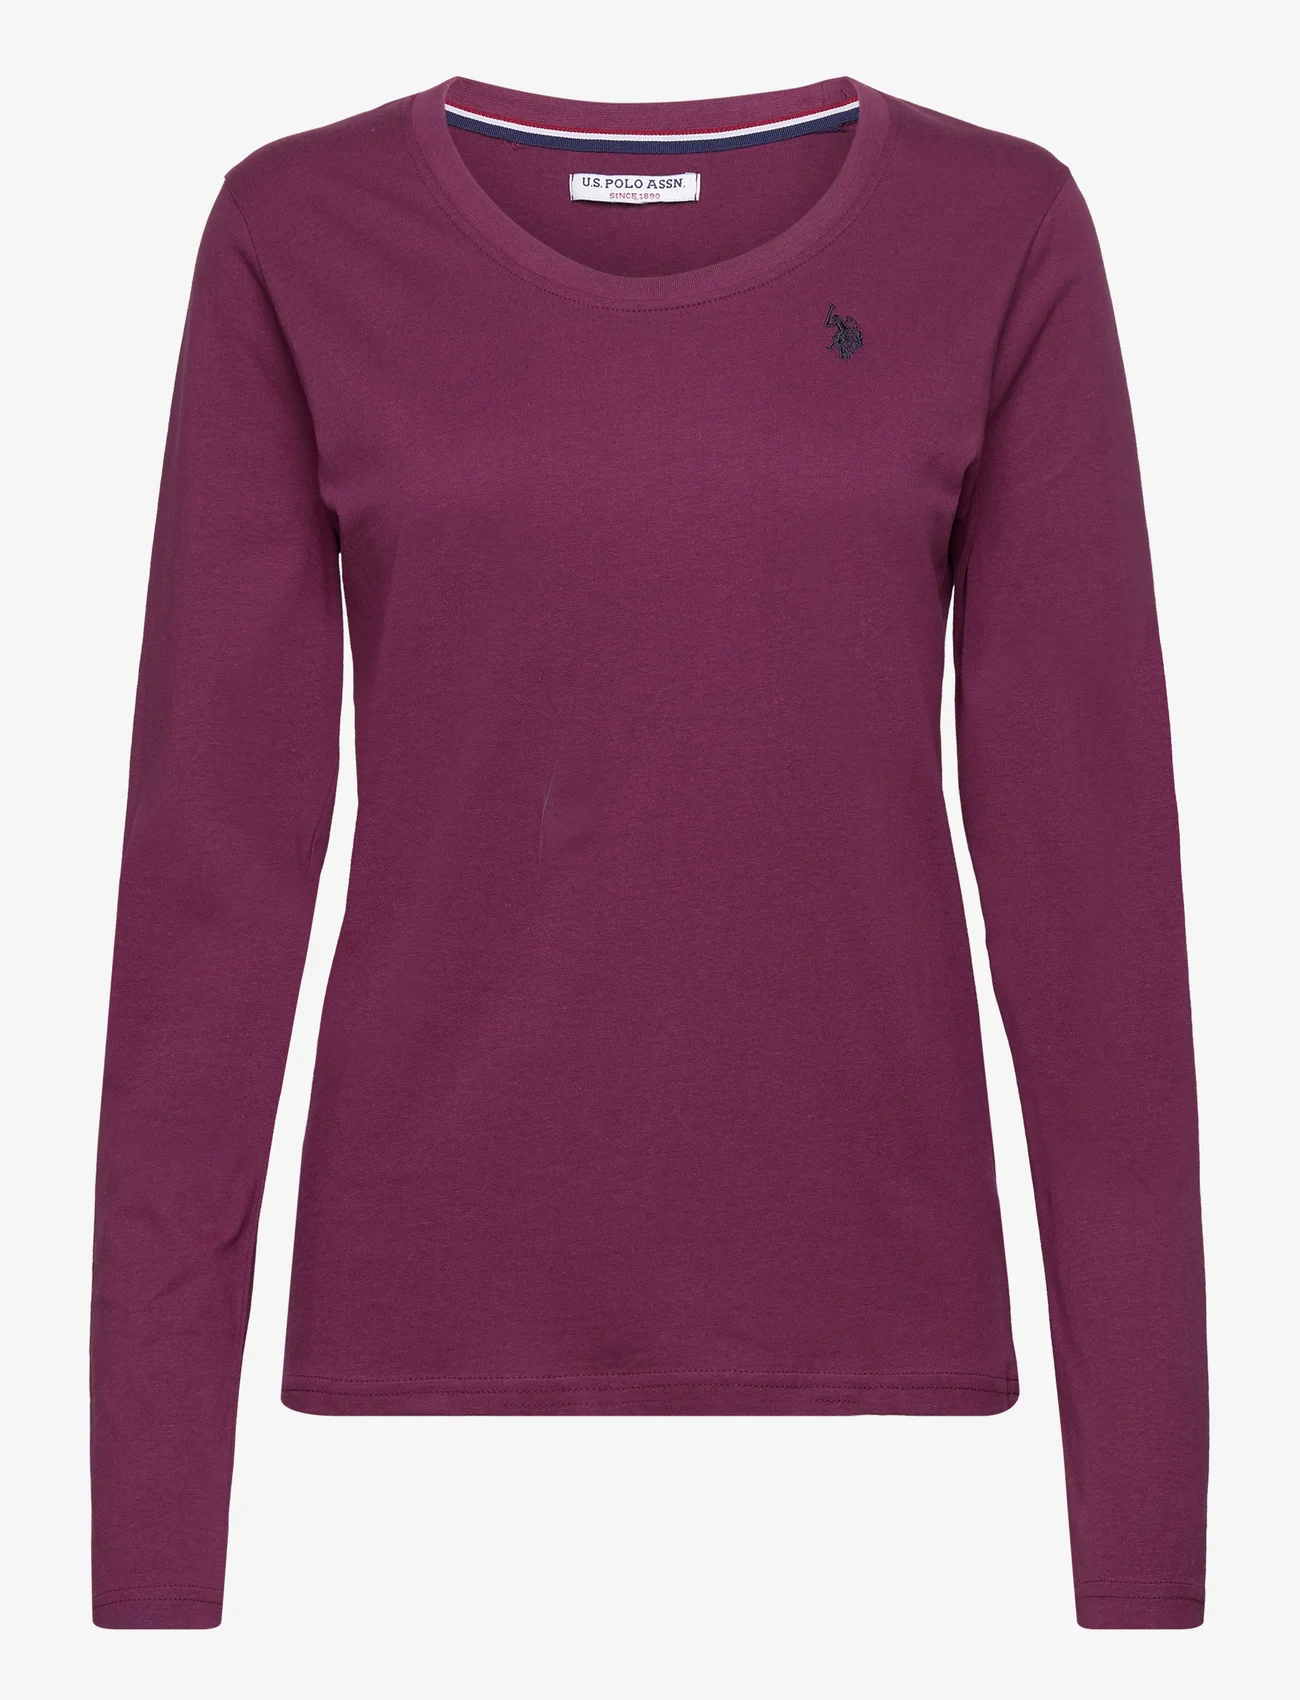 U.S. Polo Assn. - USPA LS Shirt Bridget Women - lowest prices - grape wine - 0